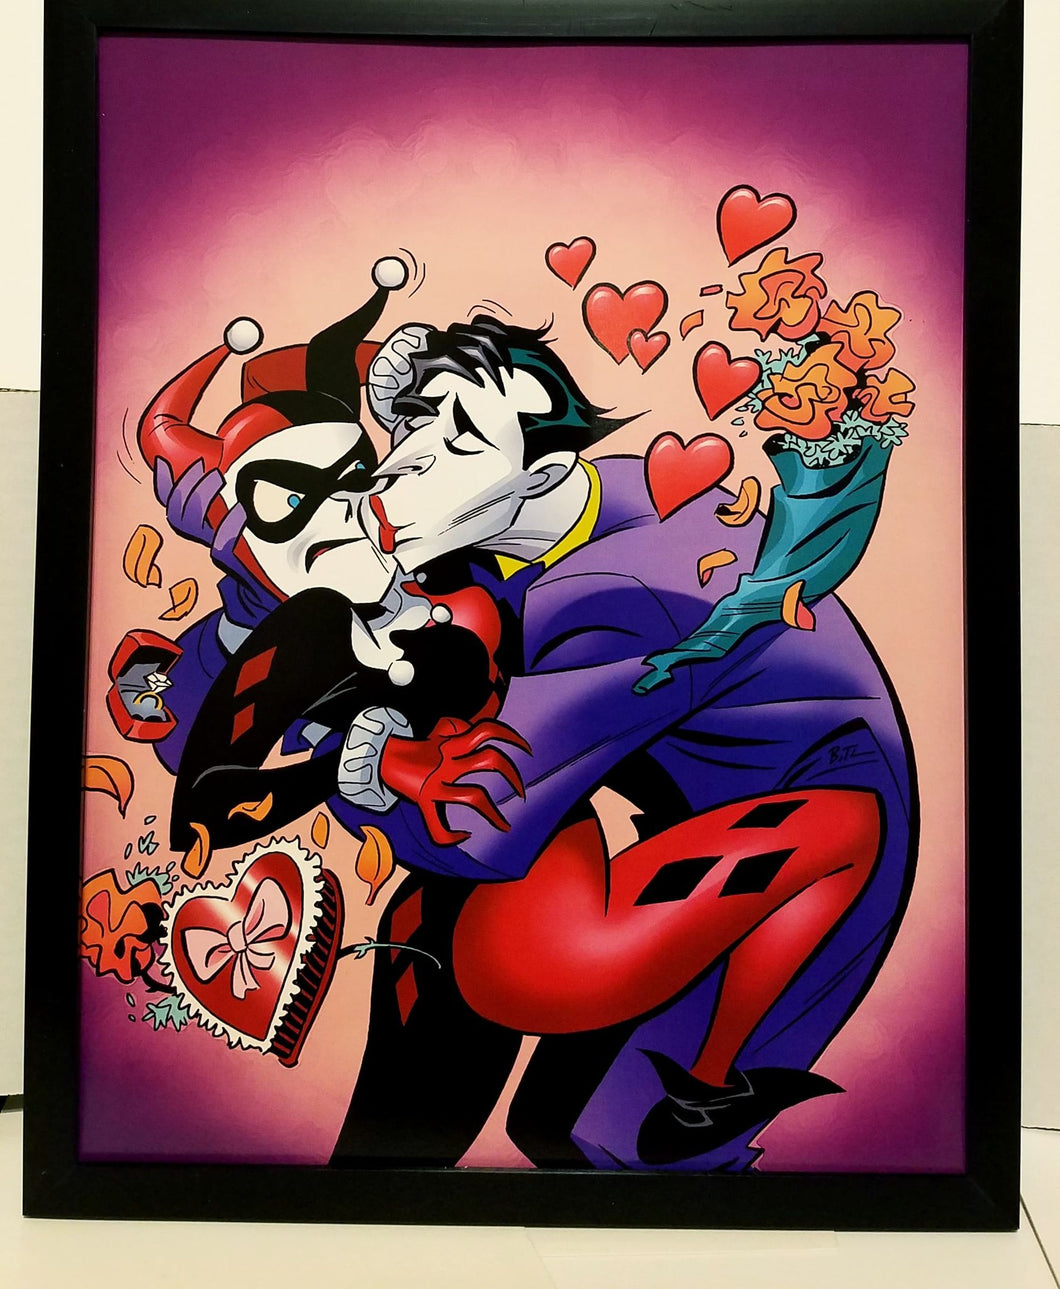 Harley Quinn & Joker BTAS by Bruce Timm 11x14 FRAMED DC Comics Art Print Poster